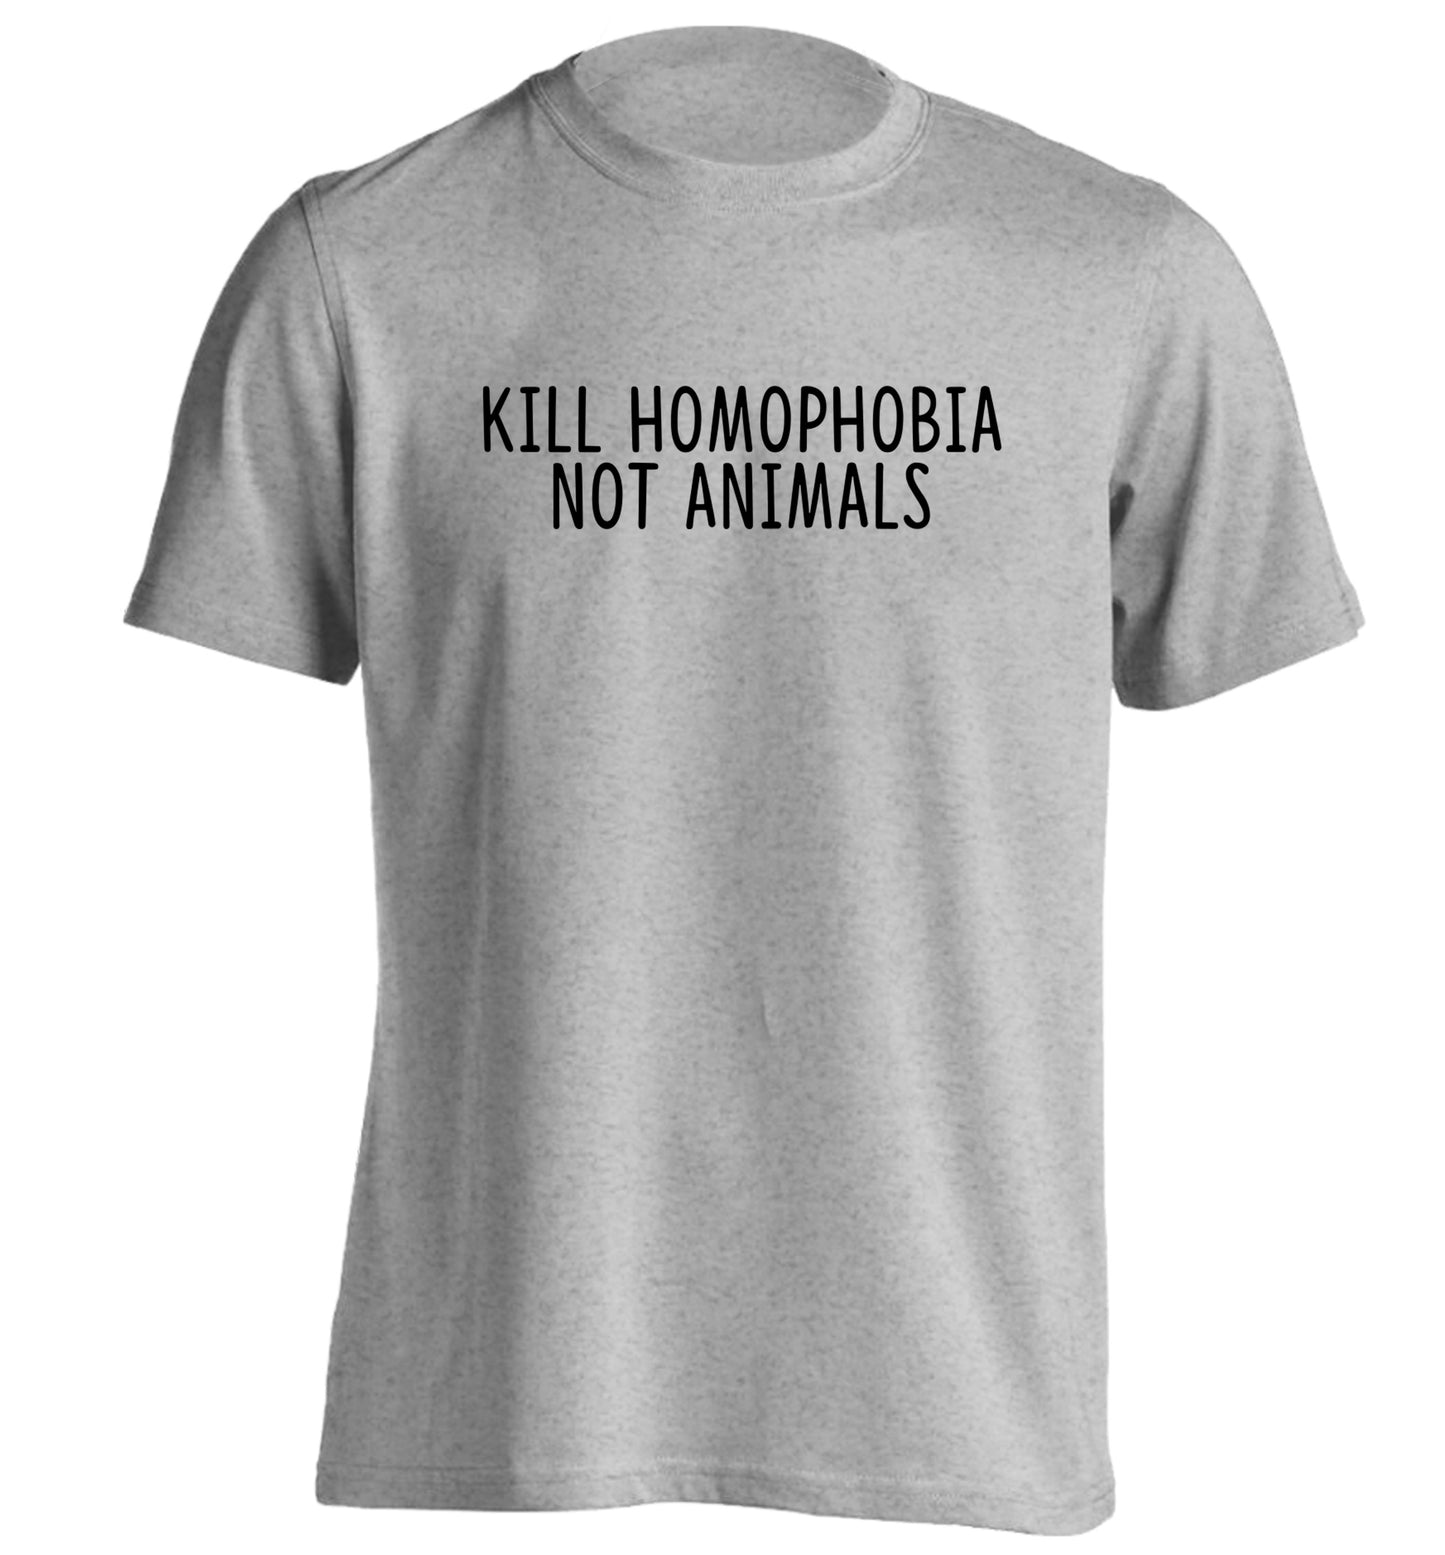 Kill Homophobia Not Animals adults unisex grey Tshirt 2XL